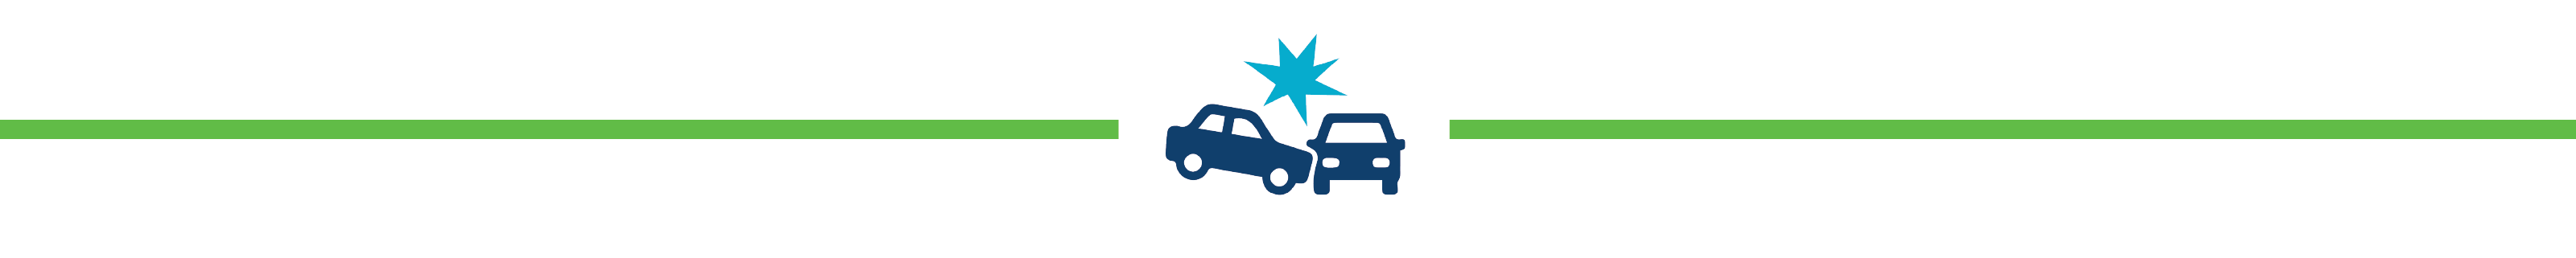 icon representing multi-vehicle crawshes